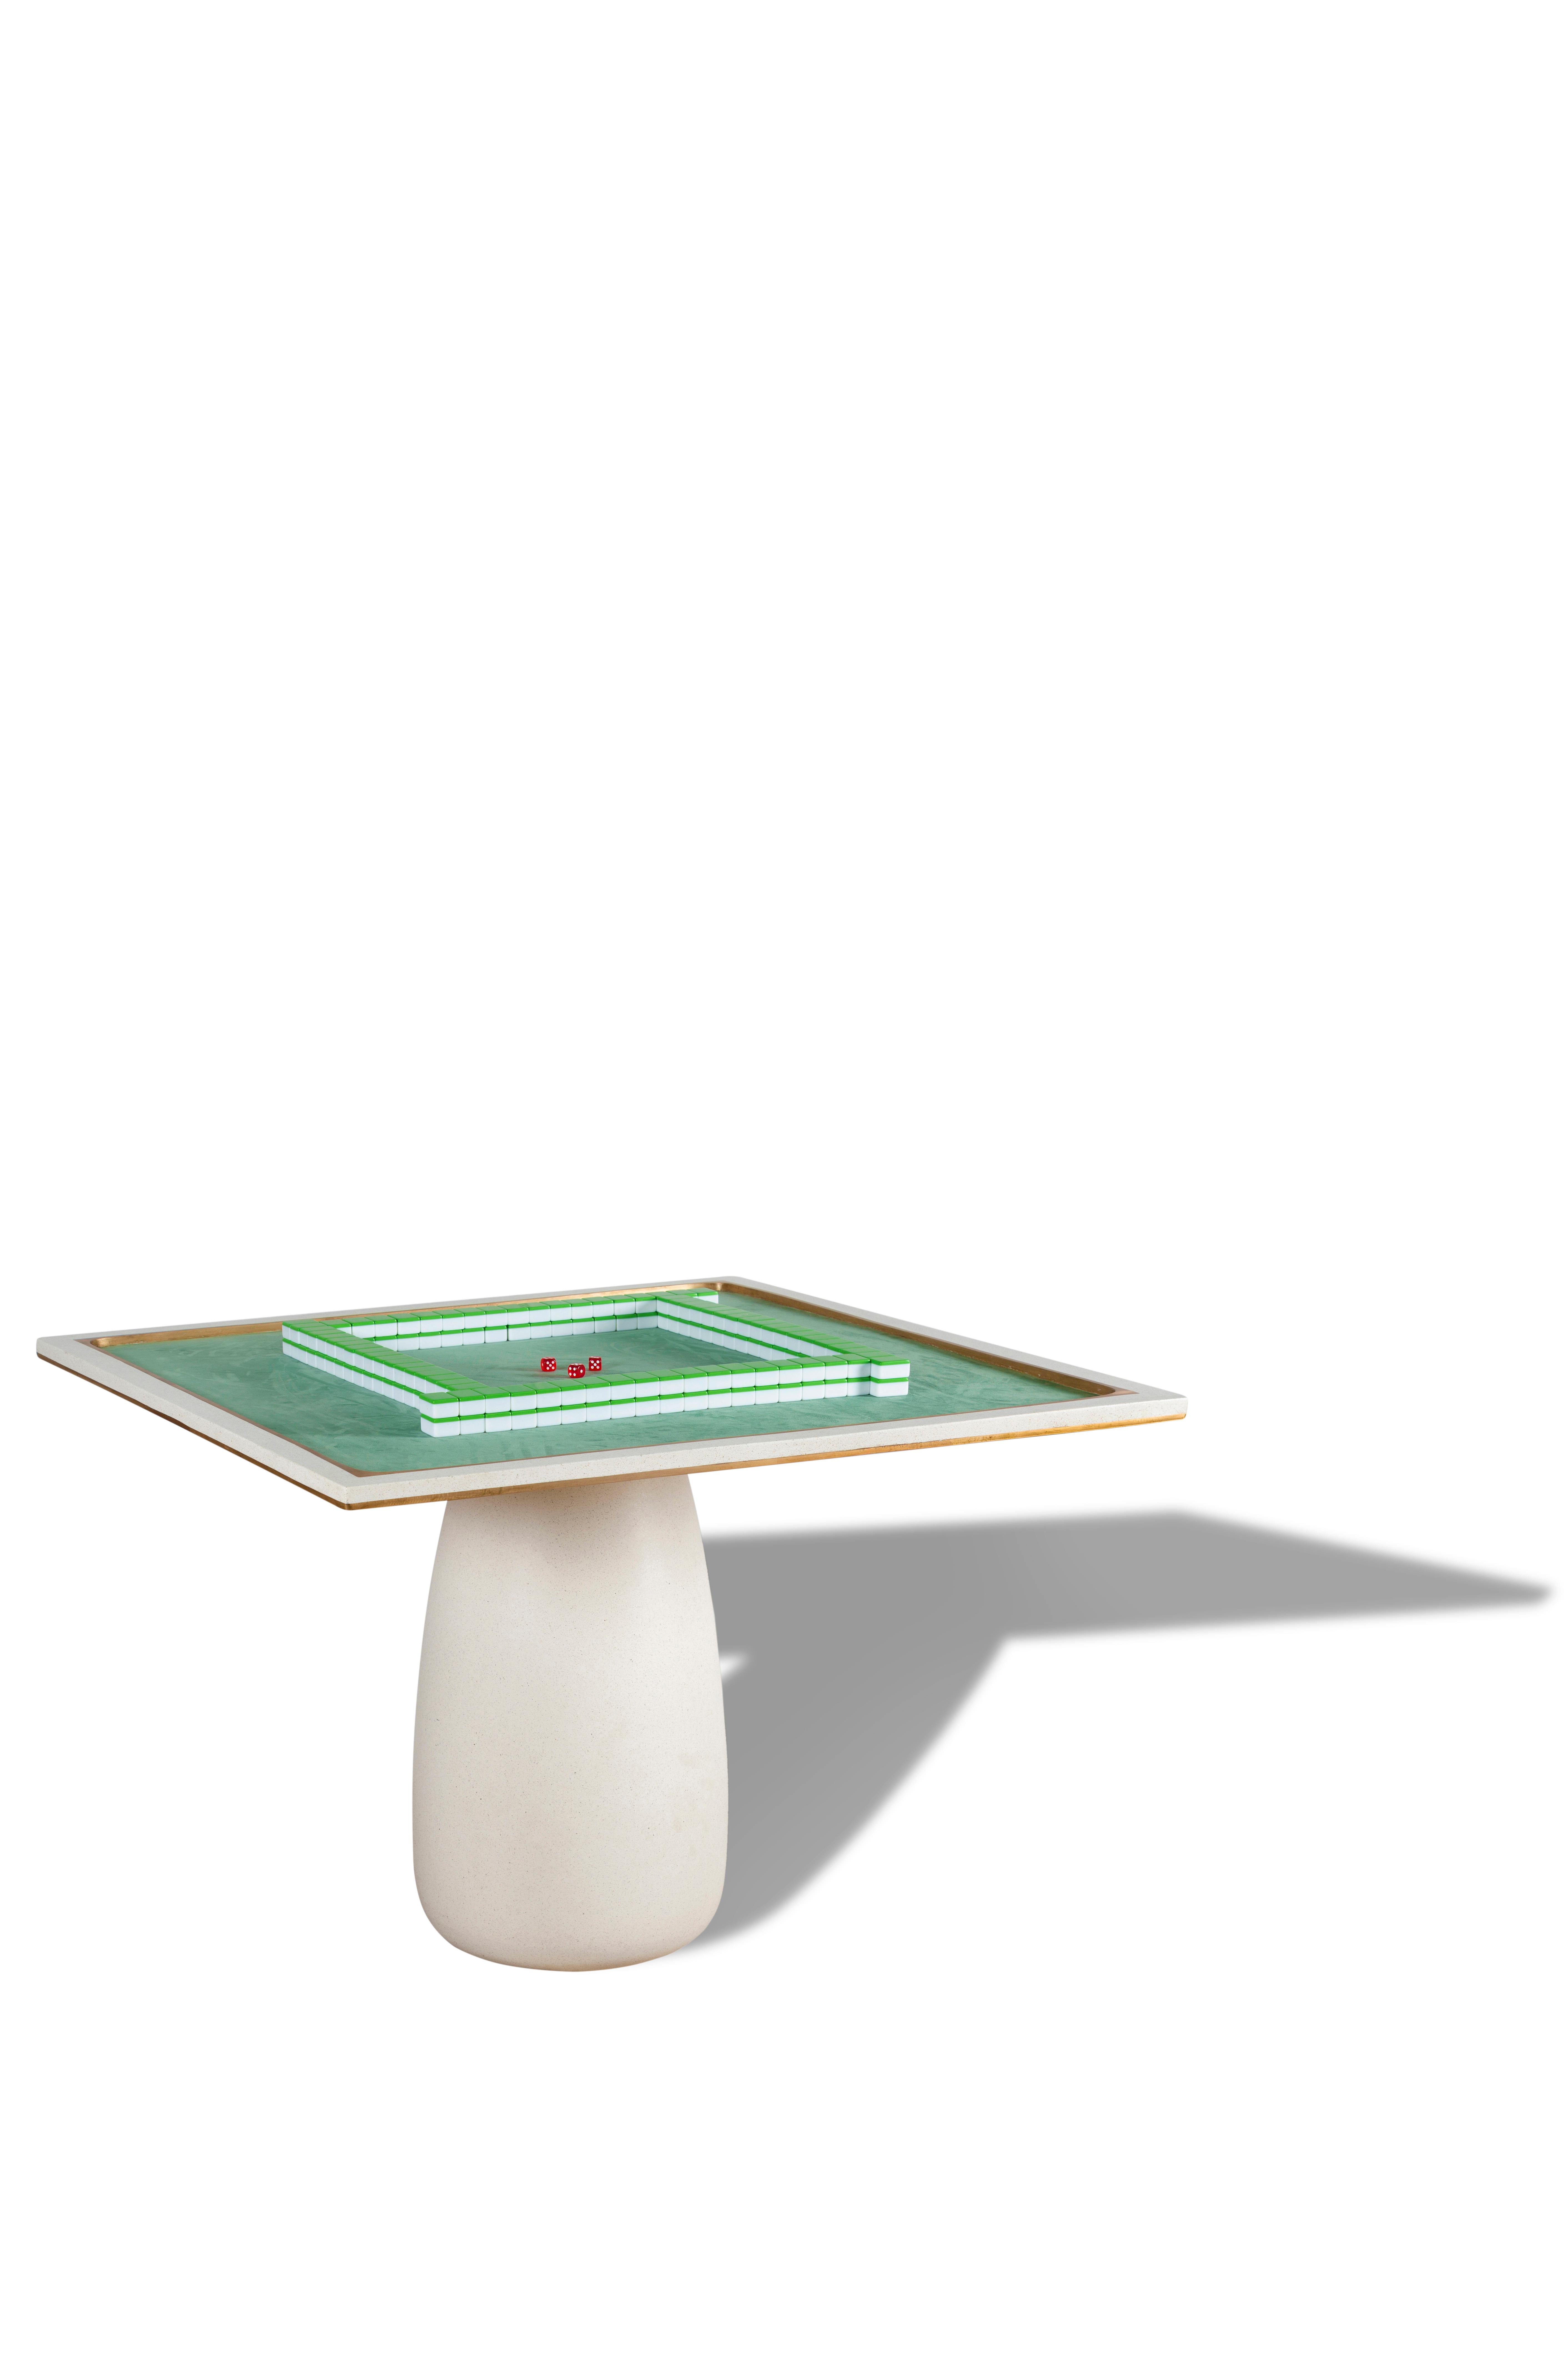 Organic Modern James de Wulf Exo Mahjong Table For Sale